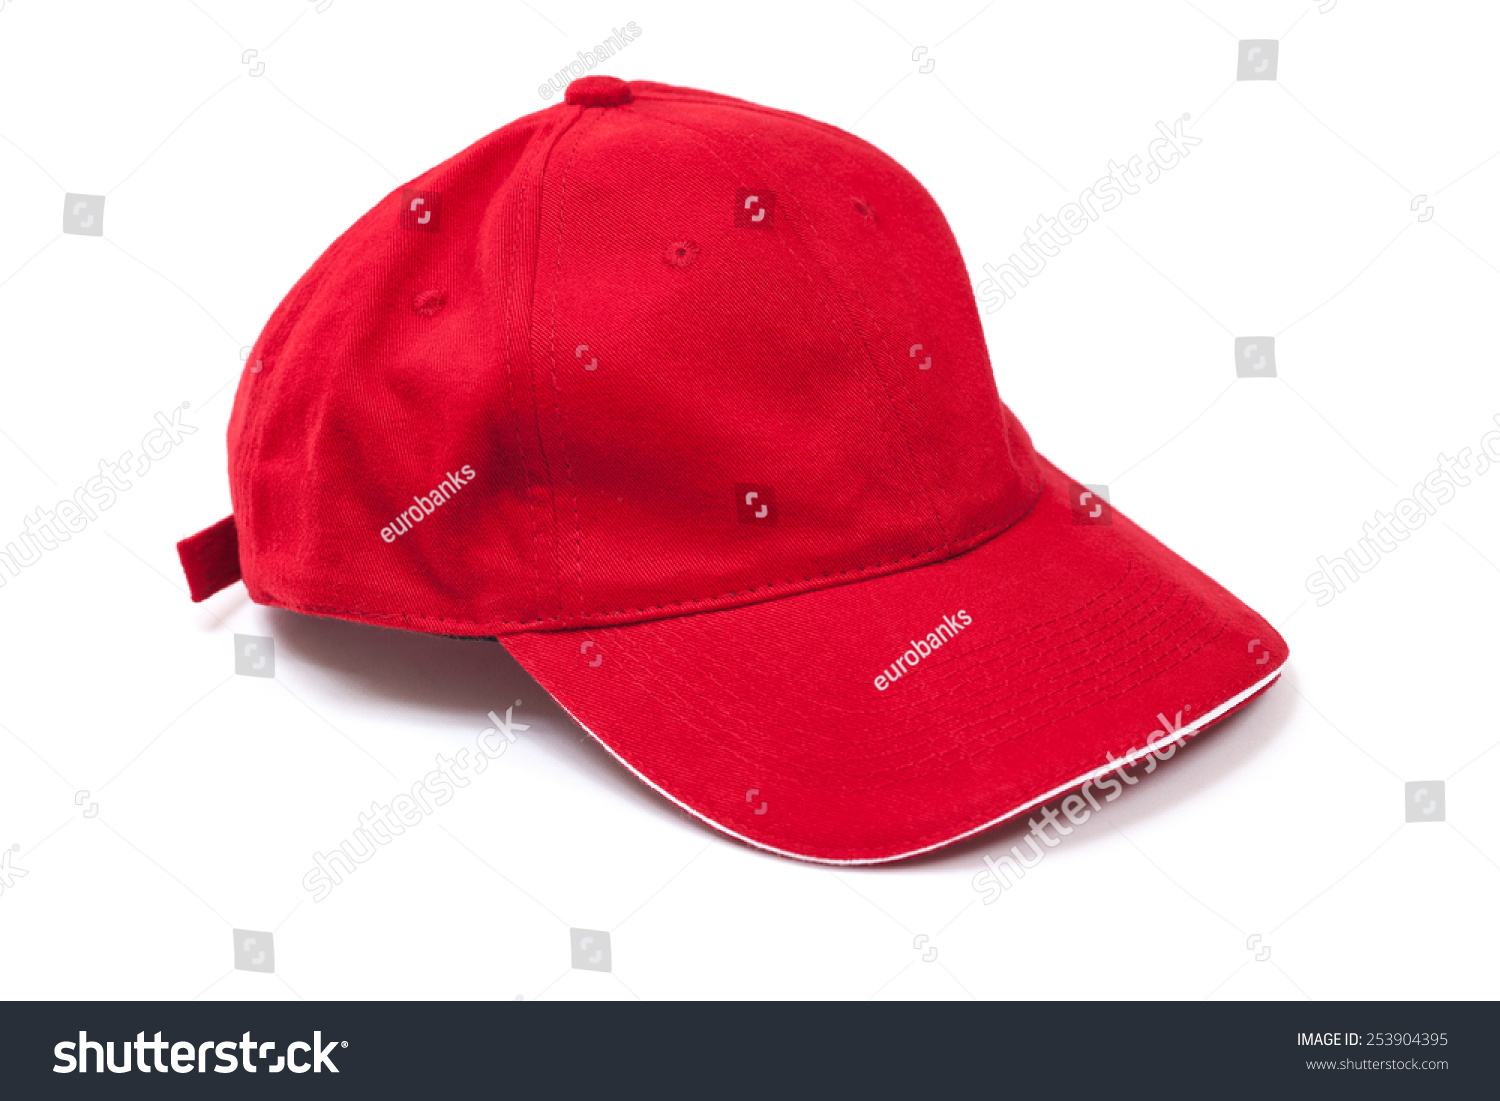 Plain Red Baseball Cap Isolated On Stock Photo 253904395 - Shutterstock